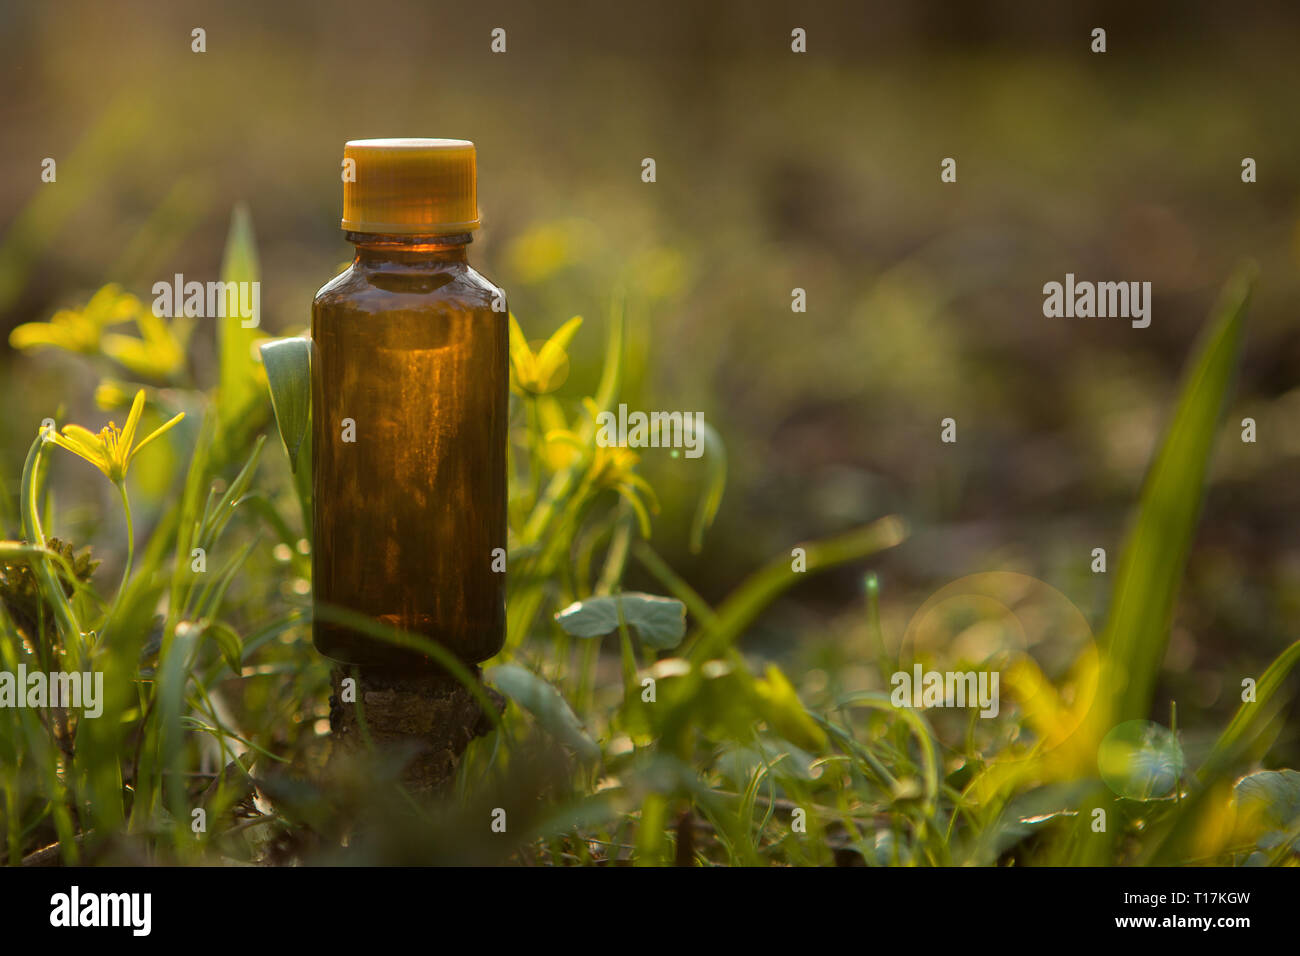 Natural remedies - natural cosmetics.  Medical amber bottle - natural medicine, Stock Photo